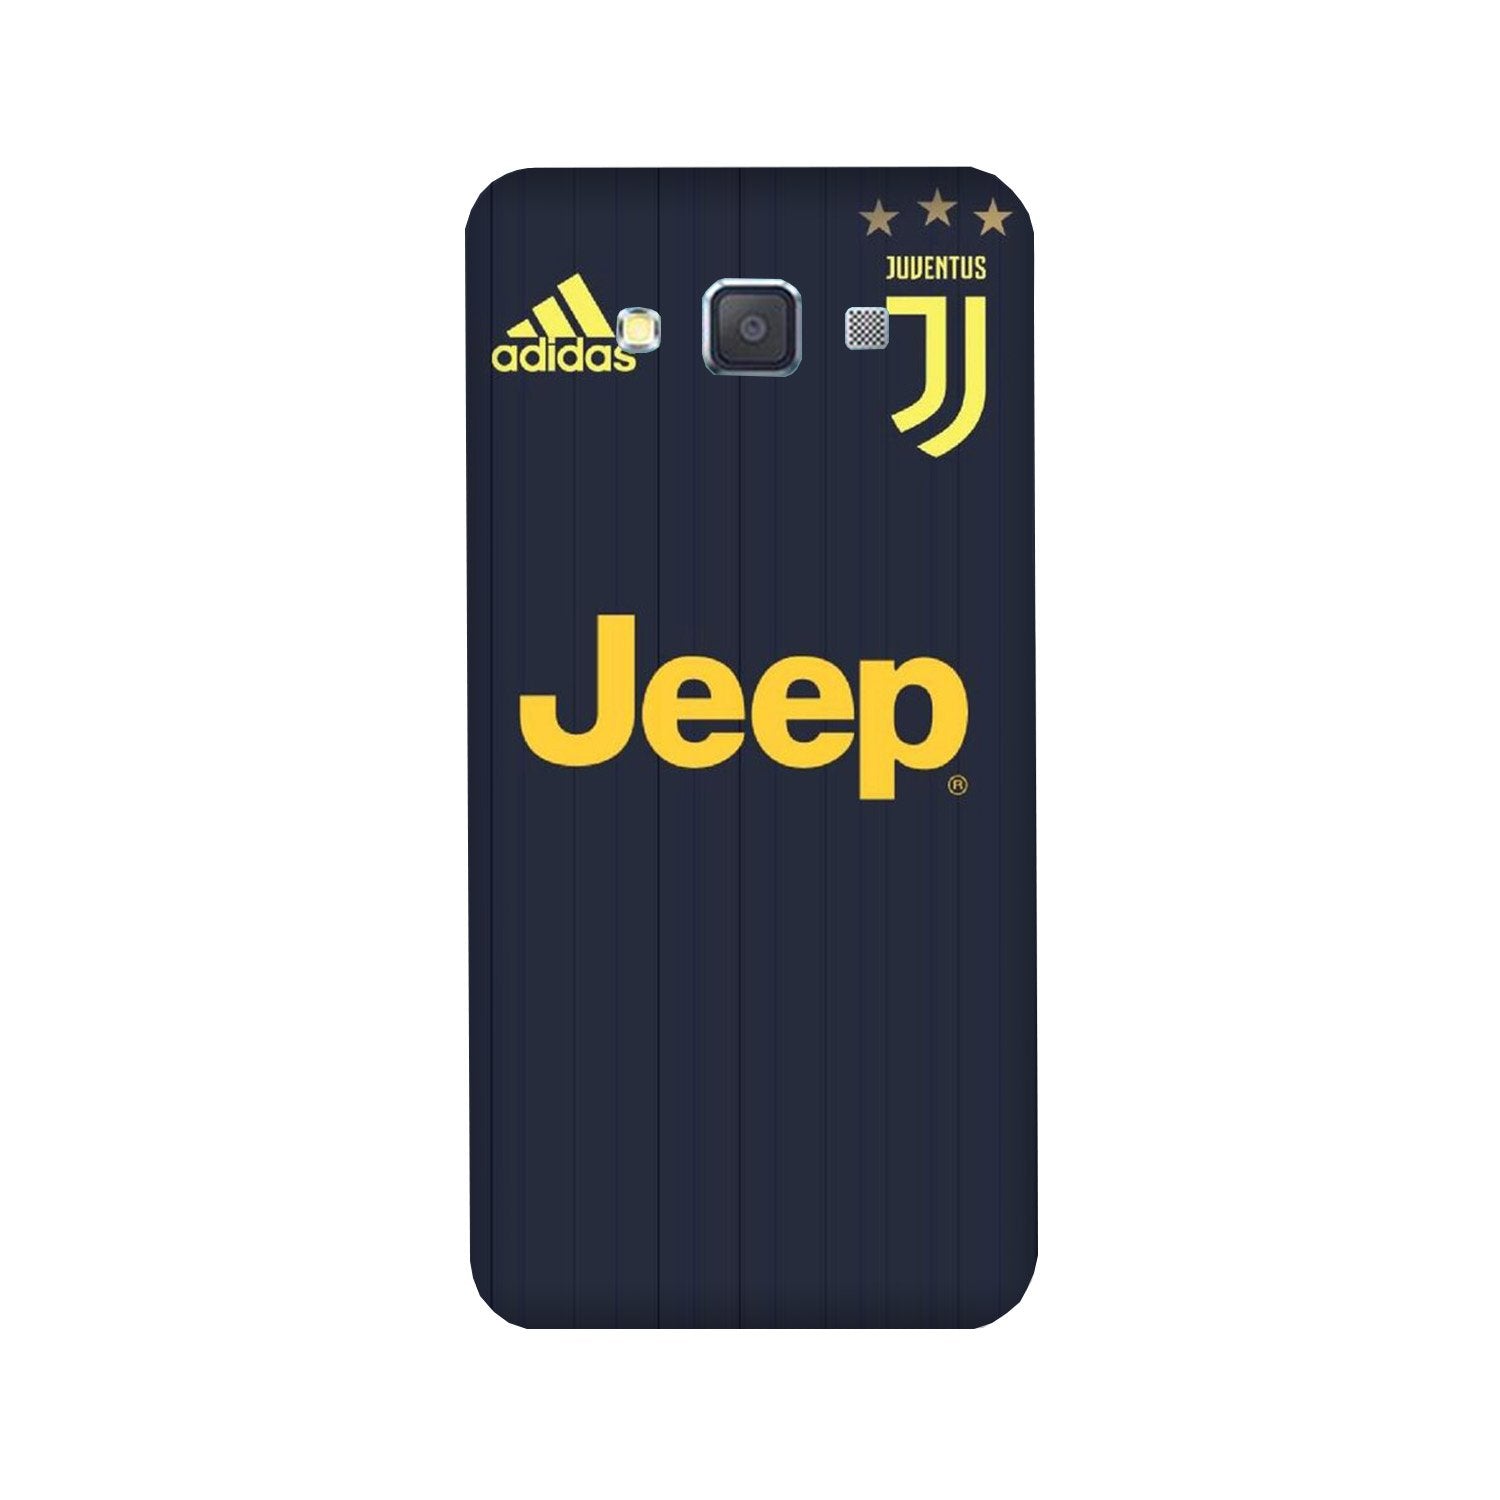 Jeep Juventus Case for Galaxy A5 (2015)(Design - 161)